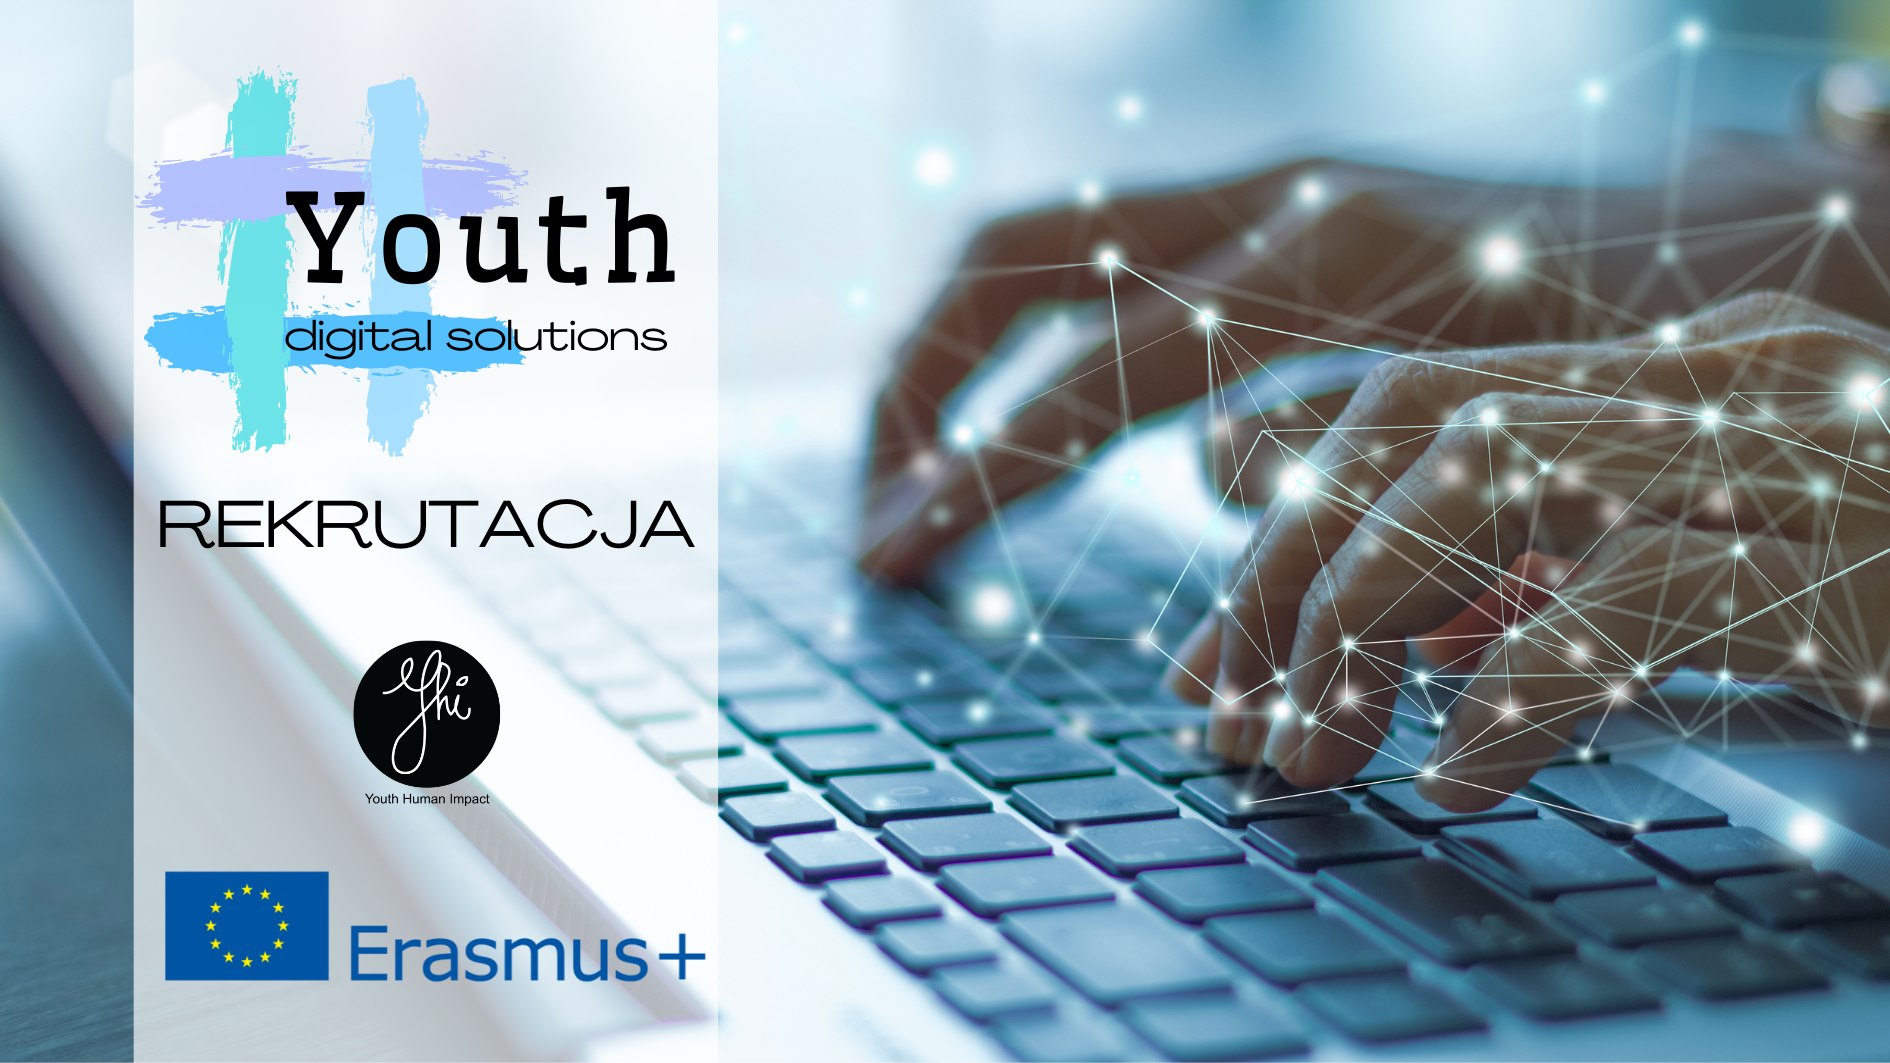 Projekt Youth Digital Solutions - rekrutacja wciąż trwa!